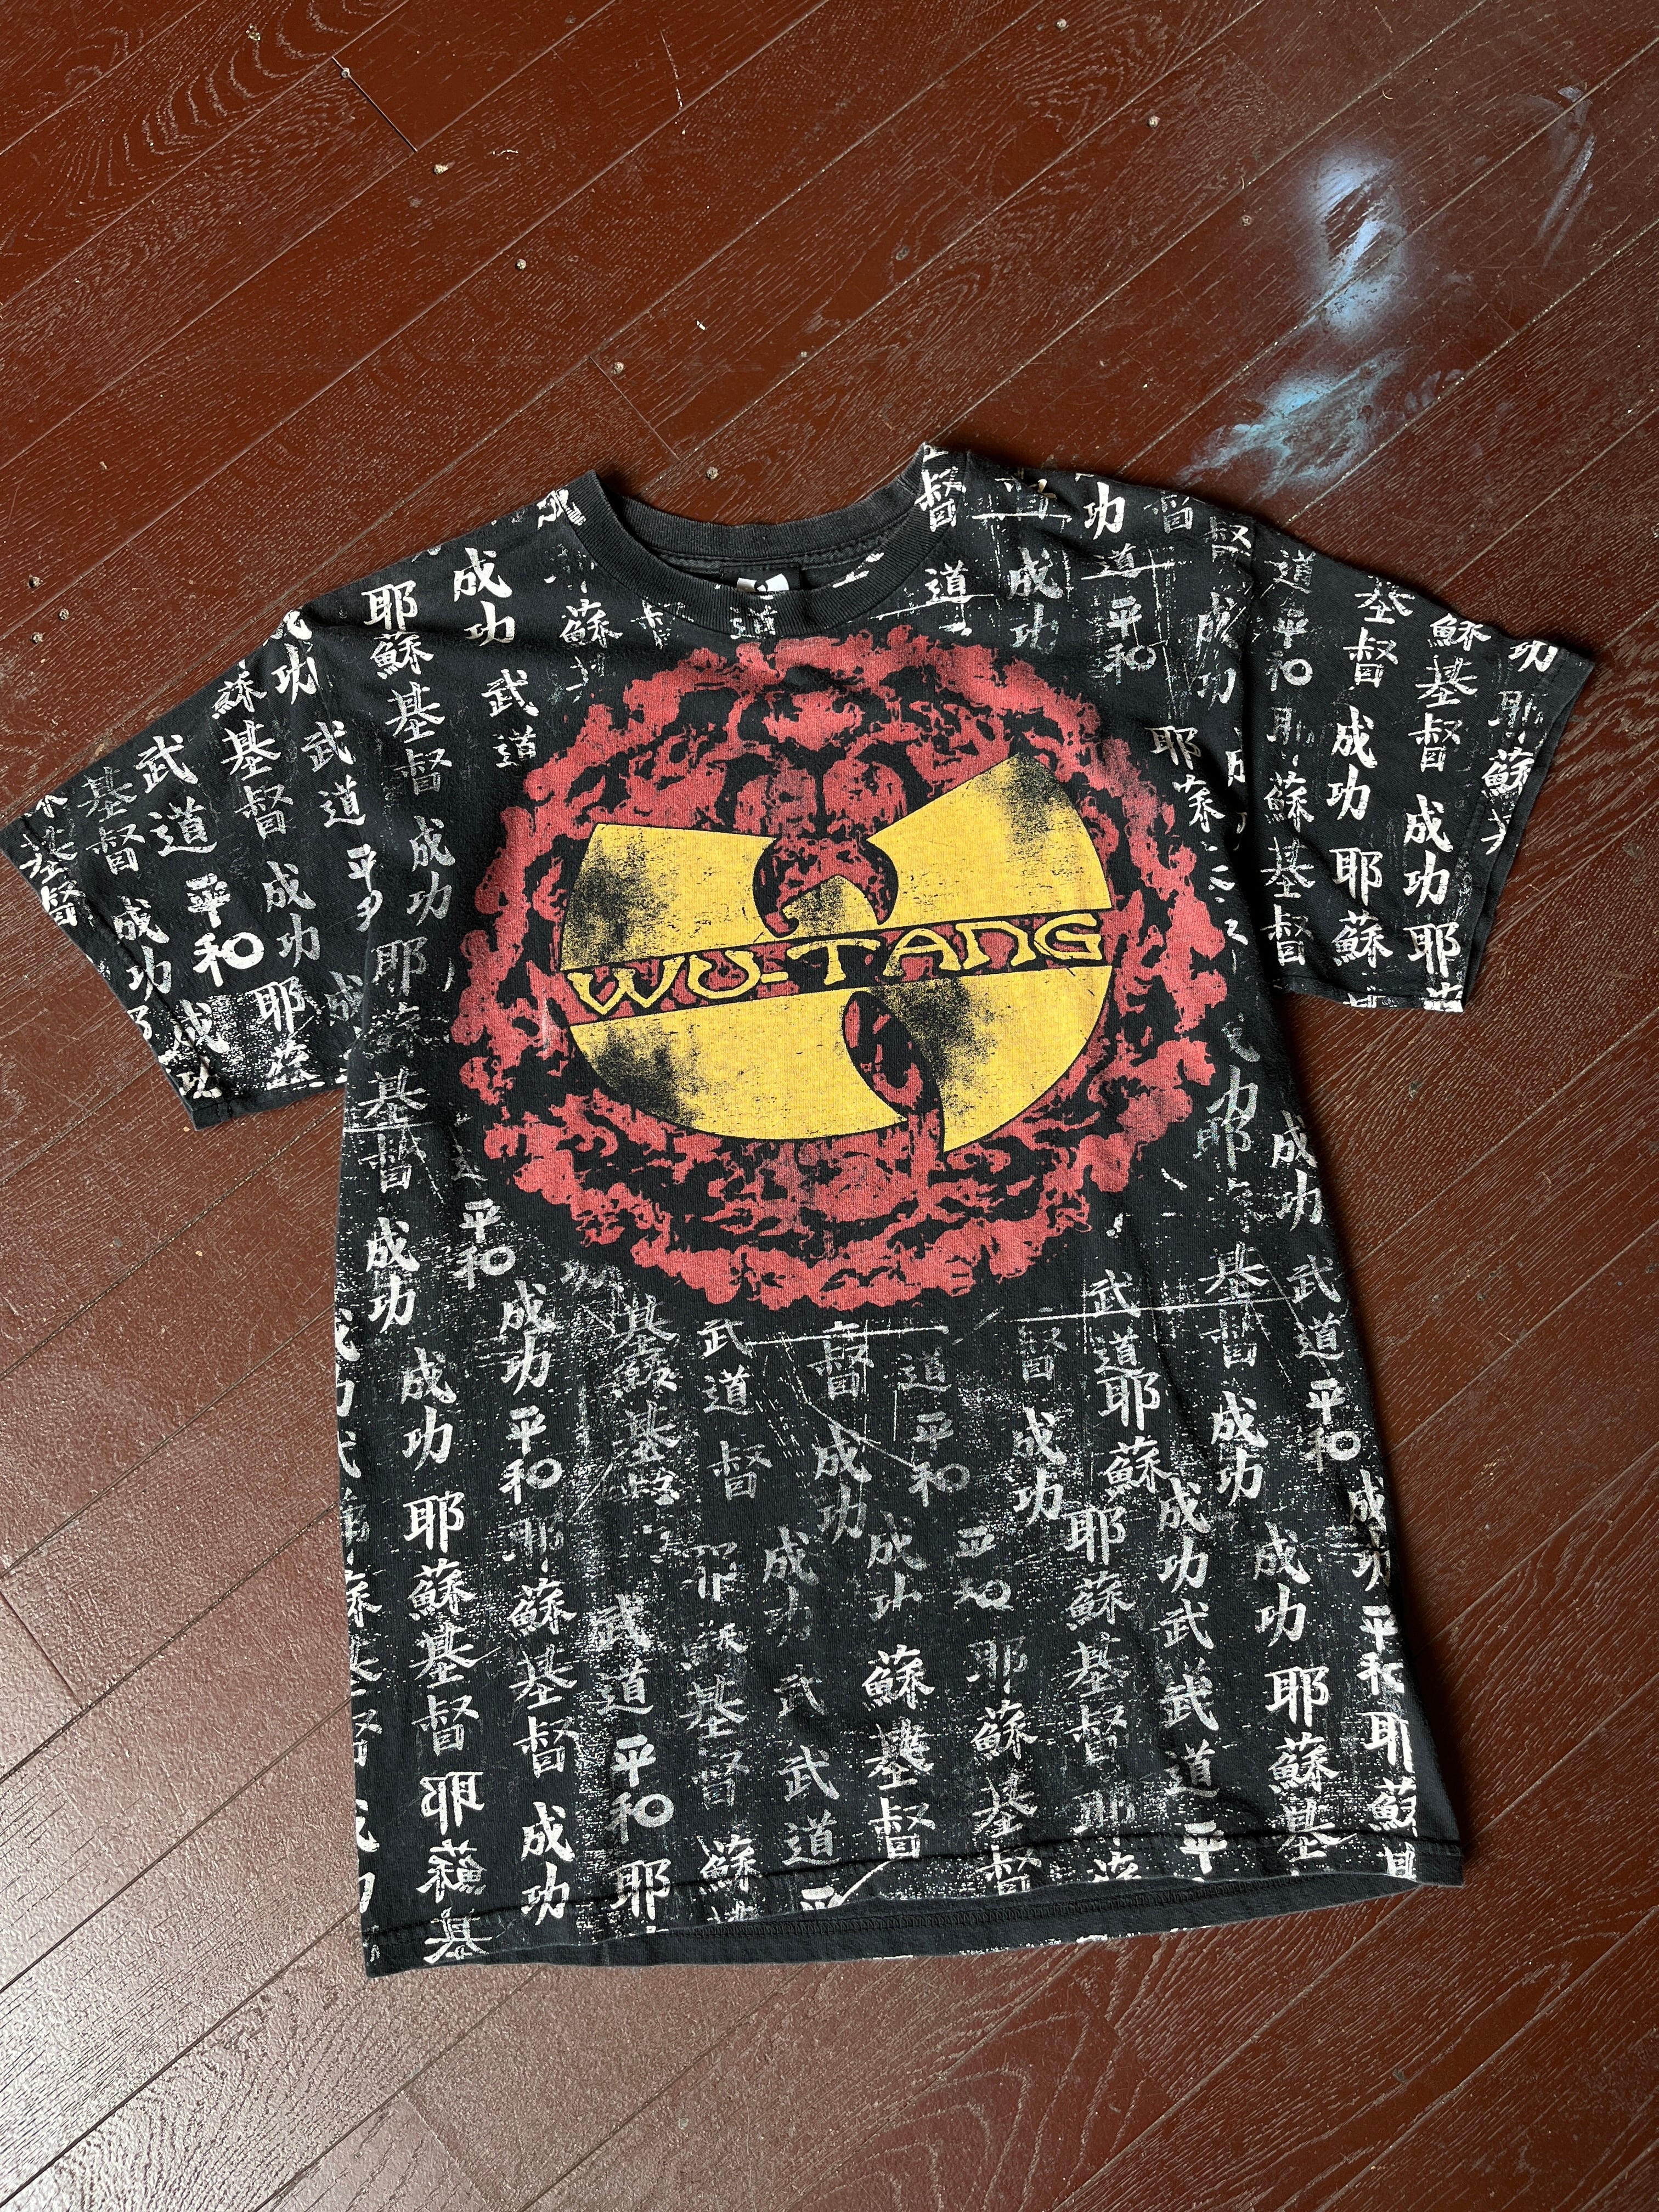 00's Wu-Tang Clan T-shirt 2007 ウータンクラン 漢字 ラップT rap tee